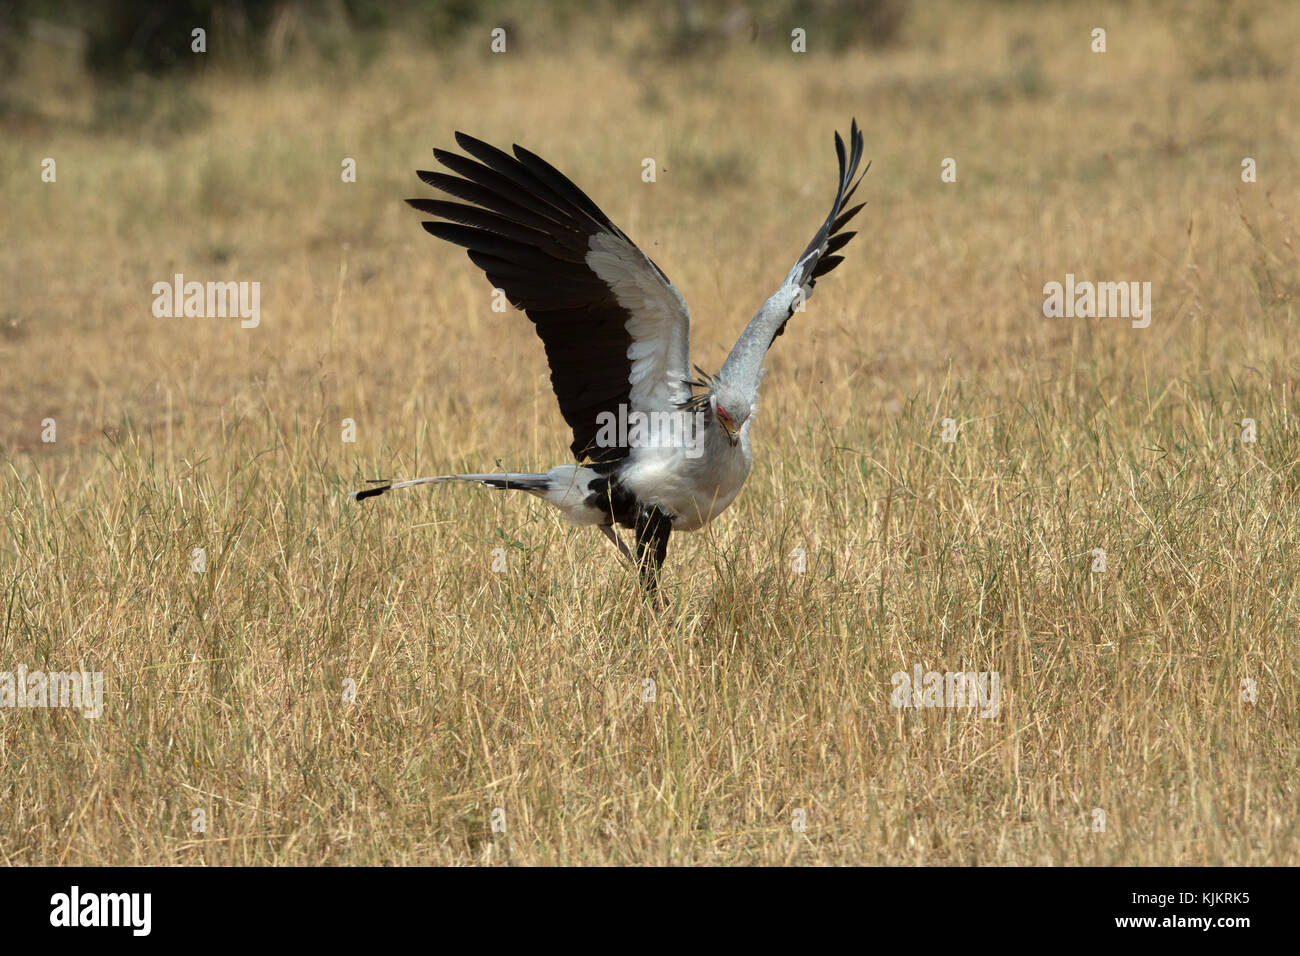 Serengeti National Park. A secretary bird (Sagittarius serpentarius). Tanzania. Stock Photo